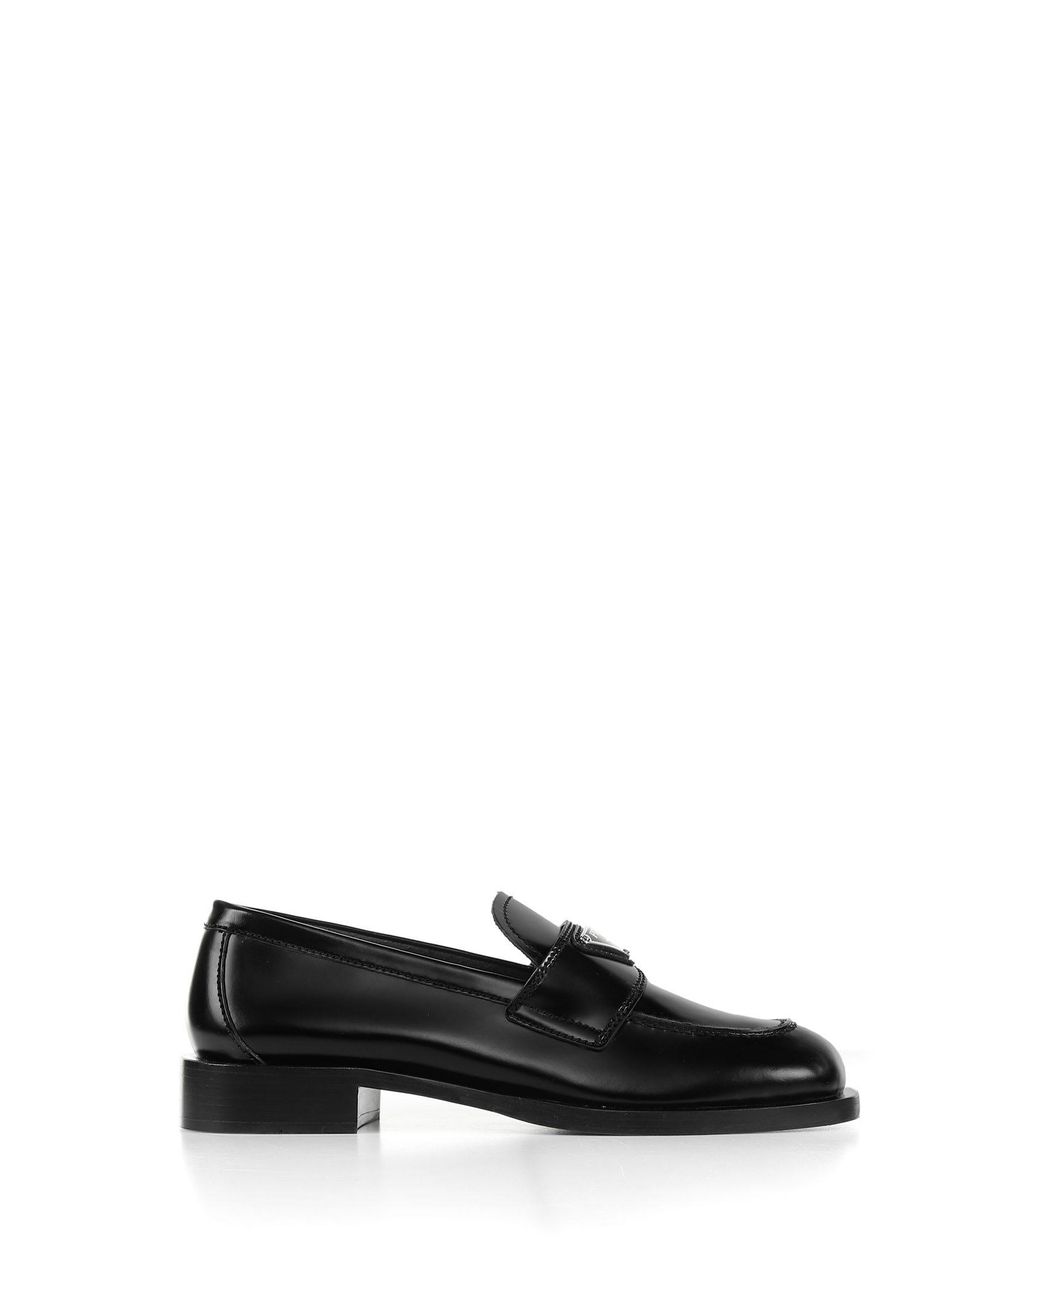 Prada Flat Shoes in Black | Lyst